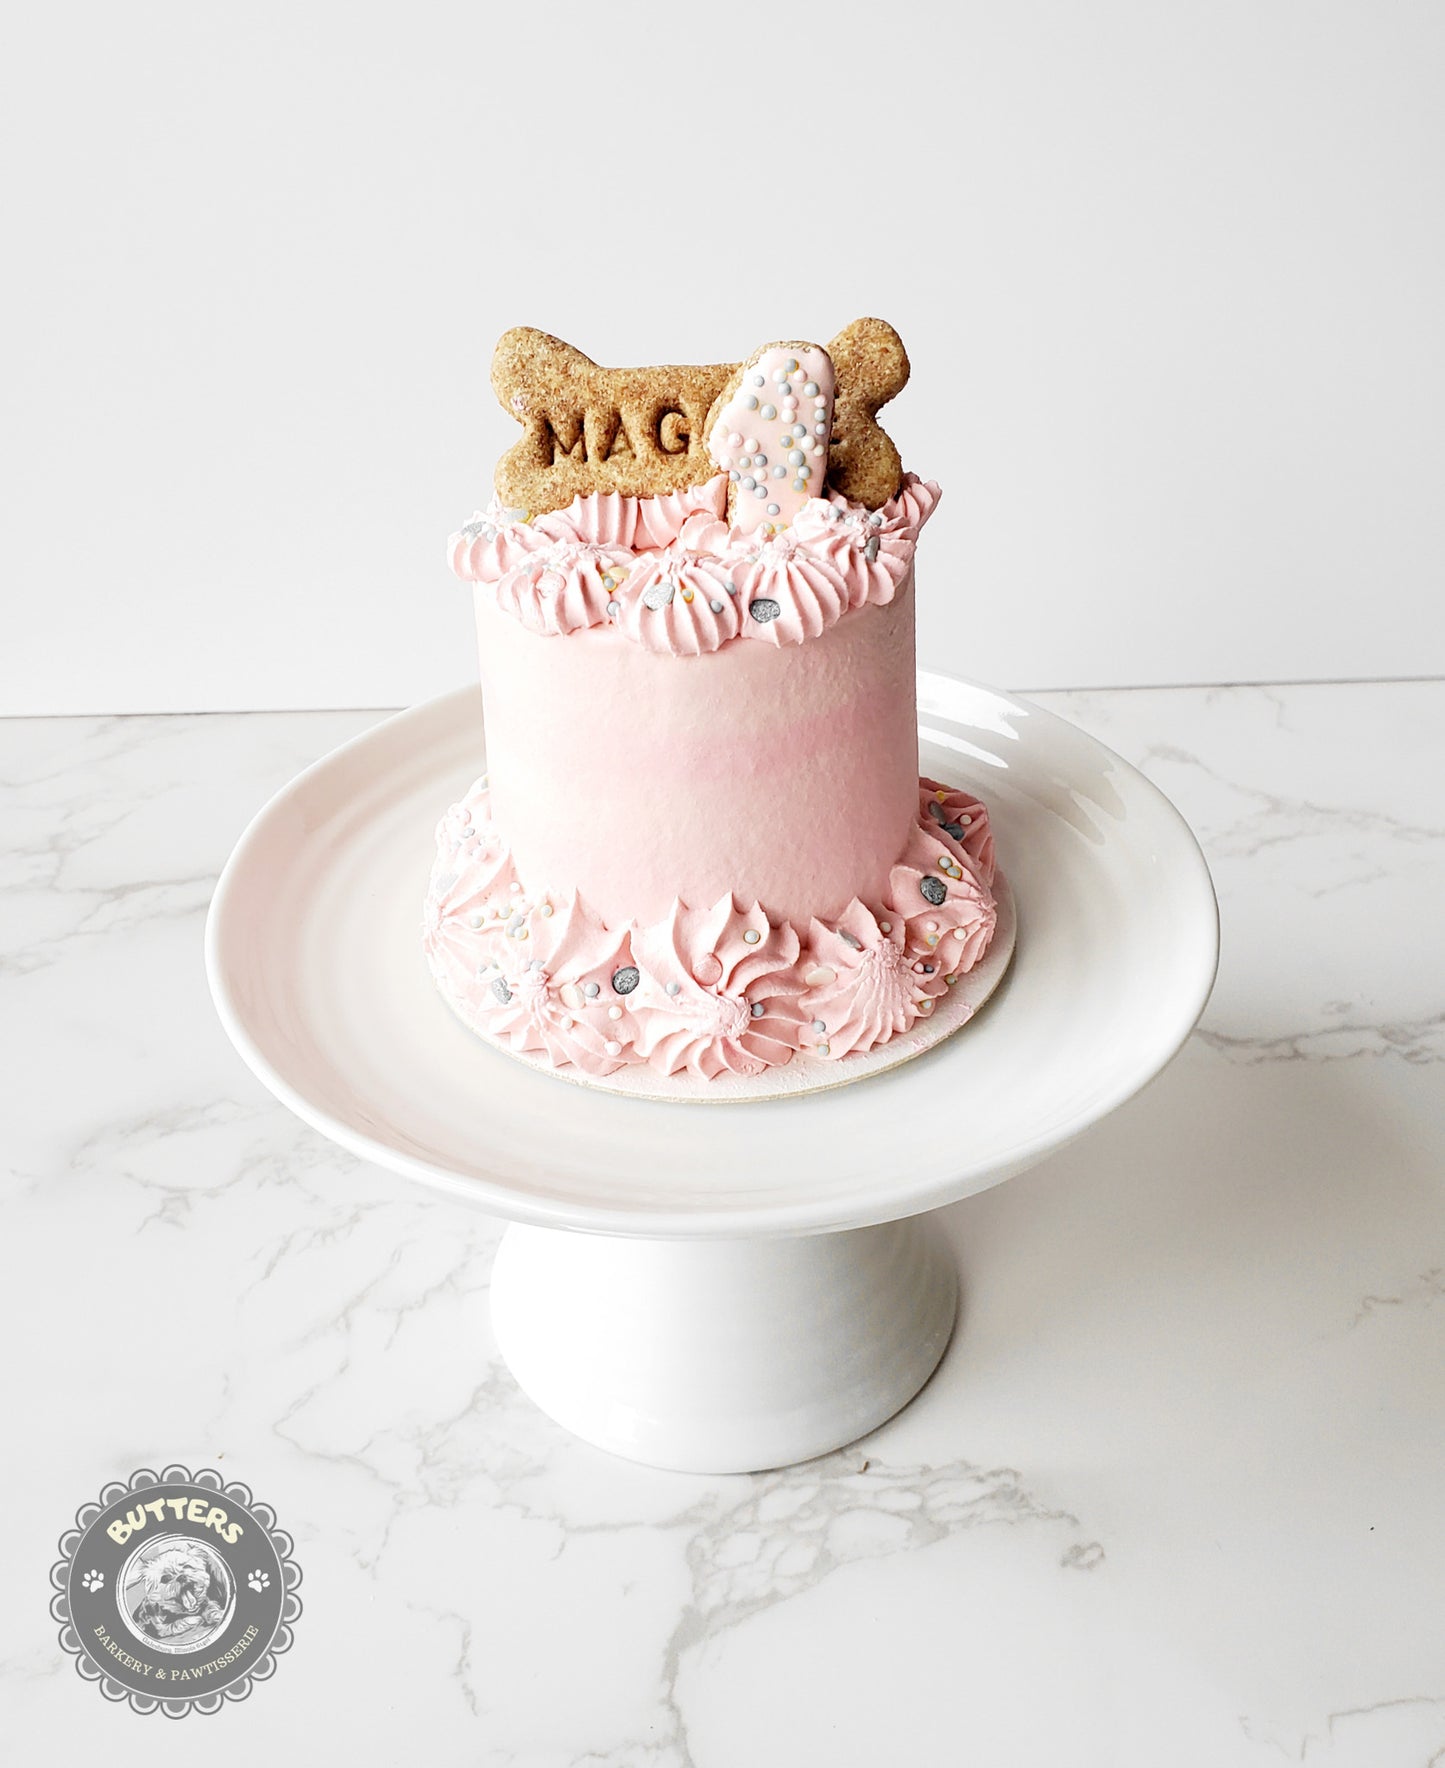 Doggy Dog Cake - Birthday or Gotcha Day